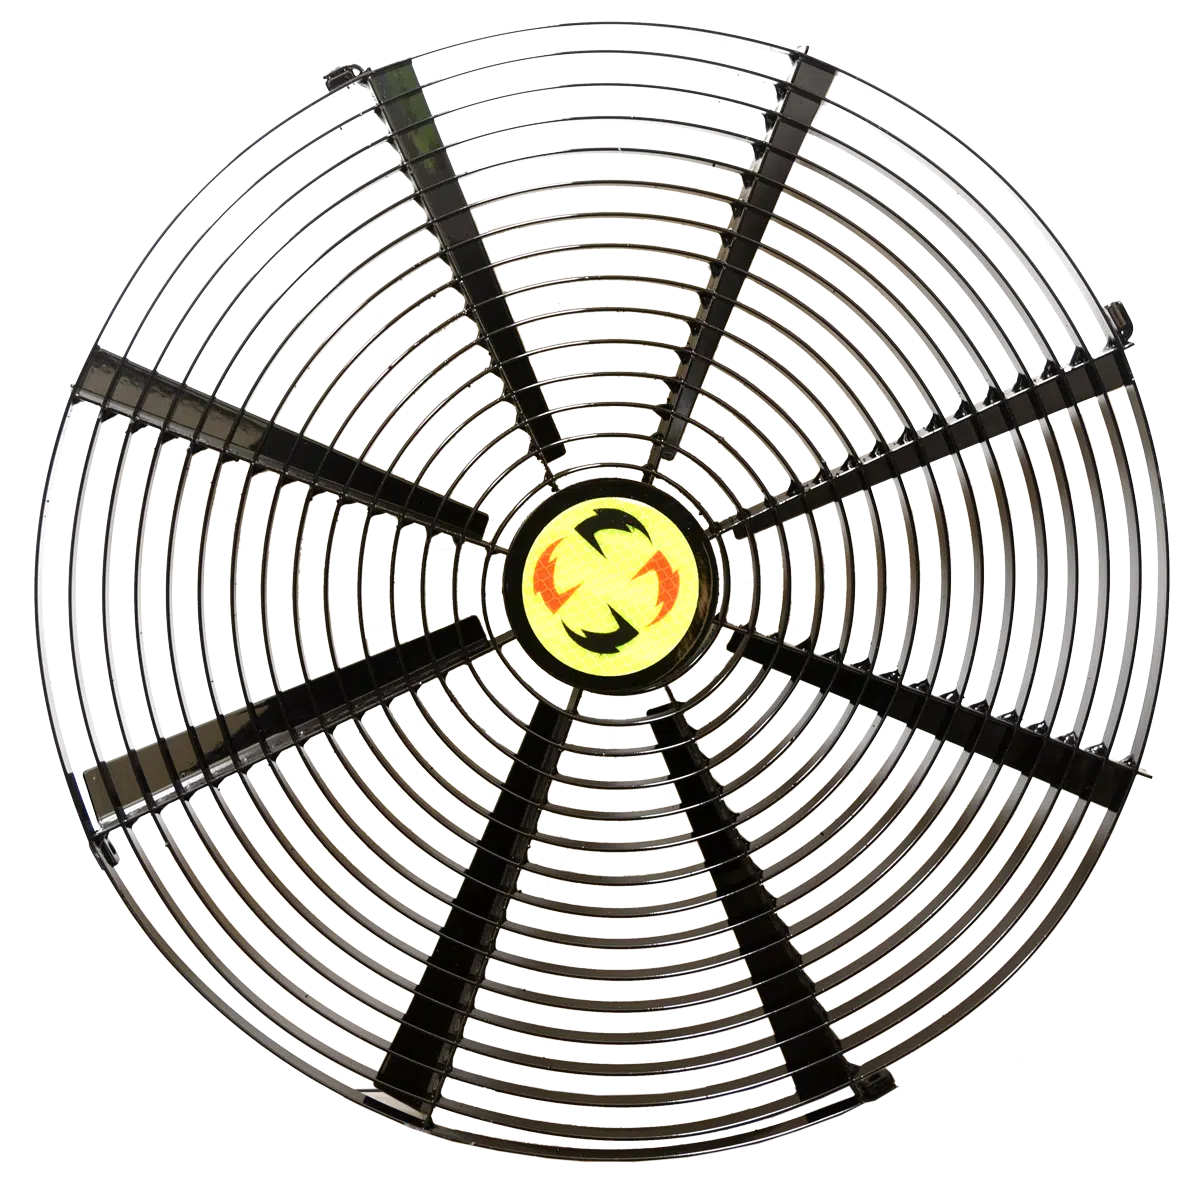 Xgsxxx - Stream Shaper PPV Fan Guard - Super Vac Ventilation Fans